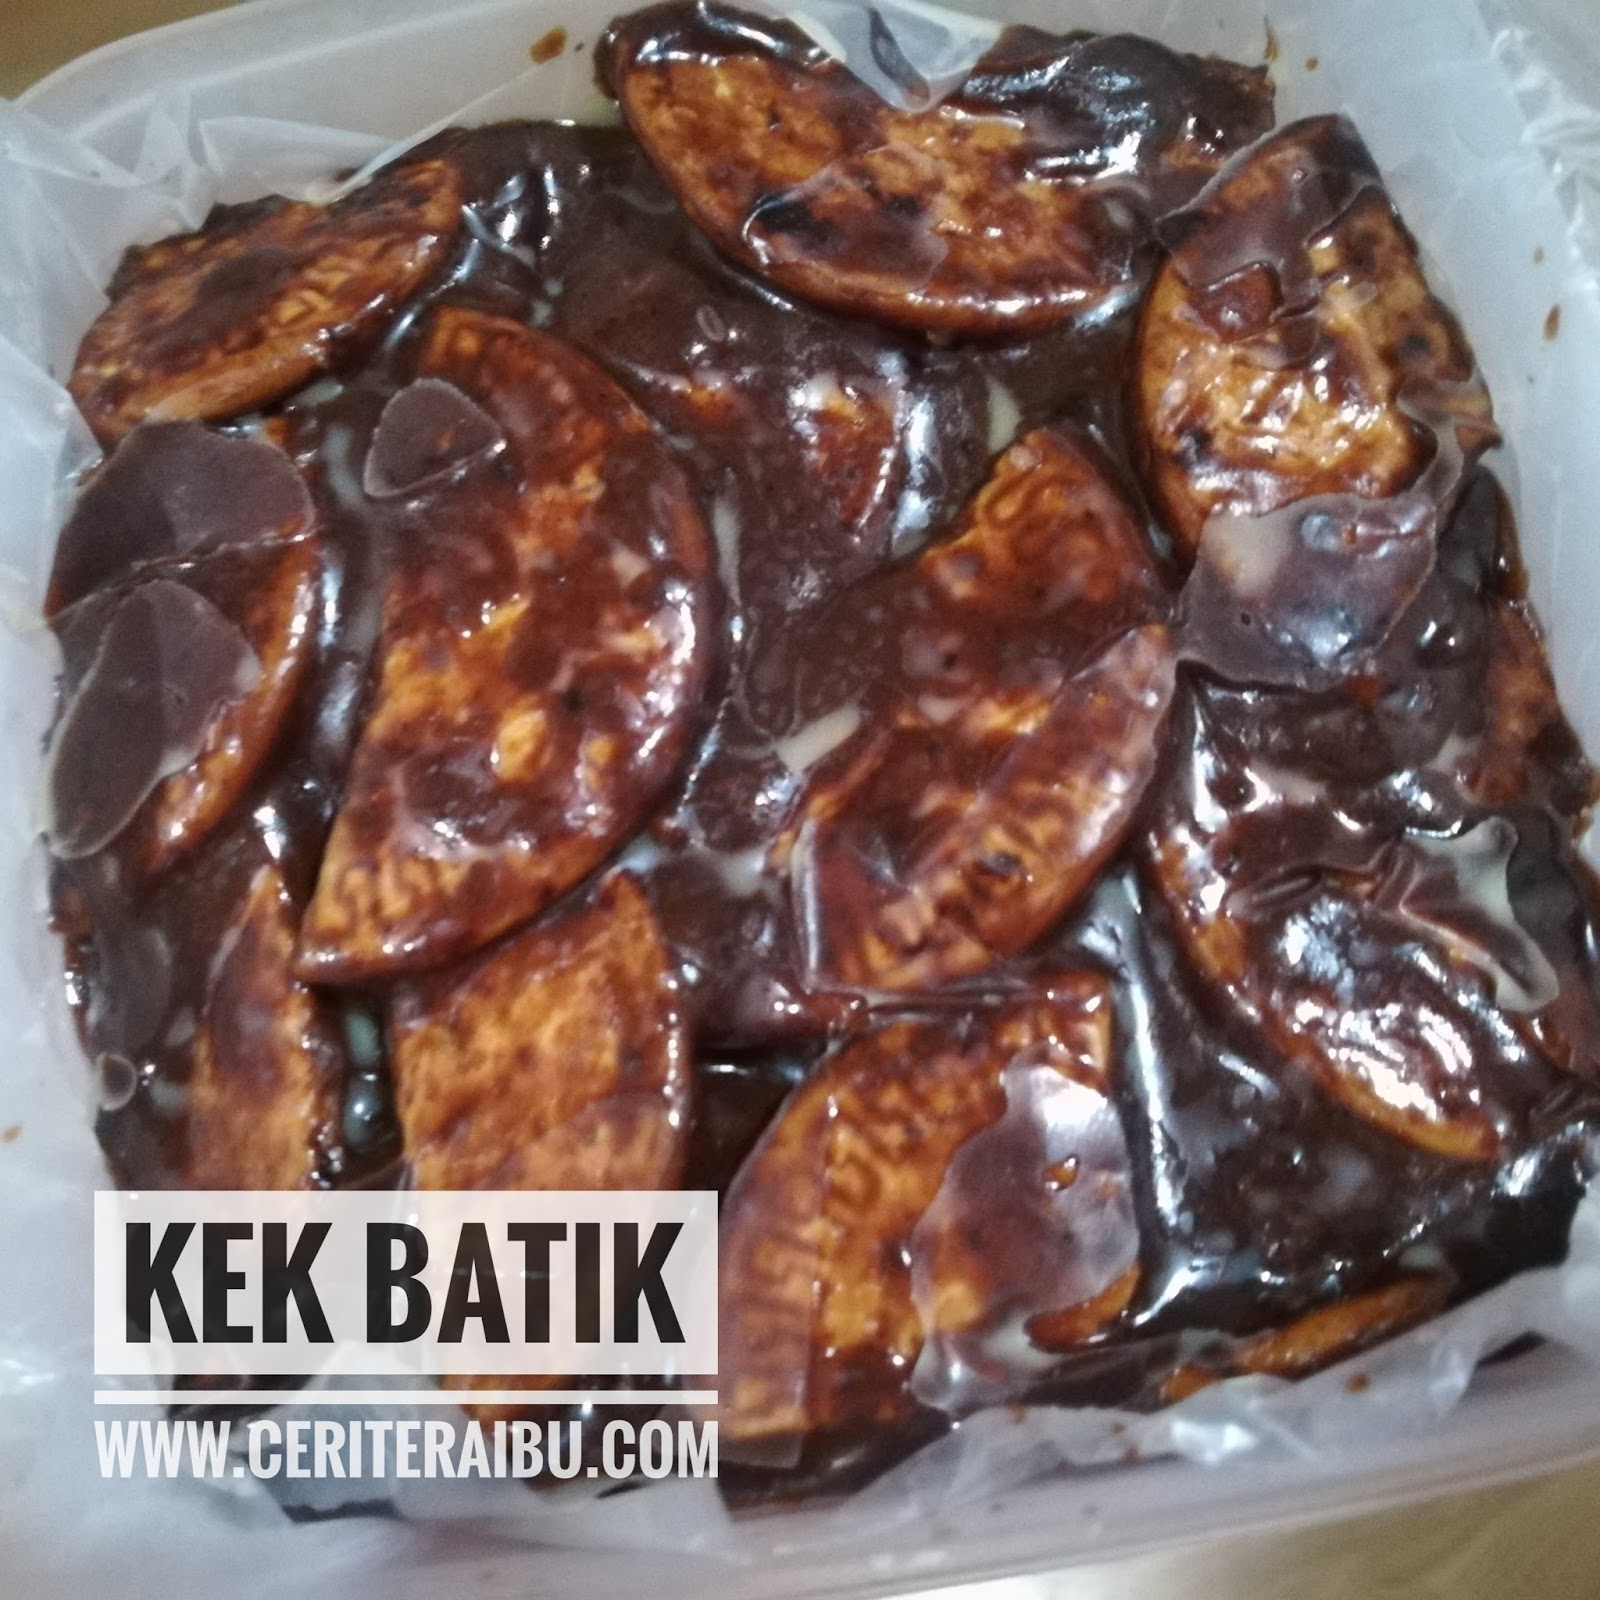 Resepi Kek Batik Noxxa - Contoh Karo